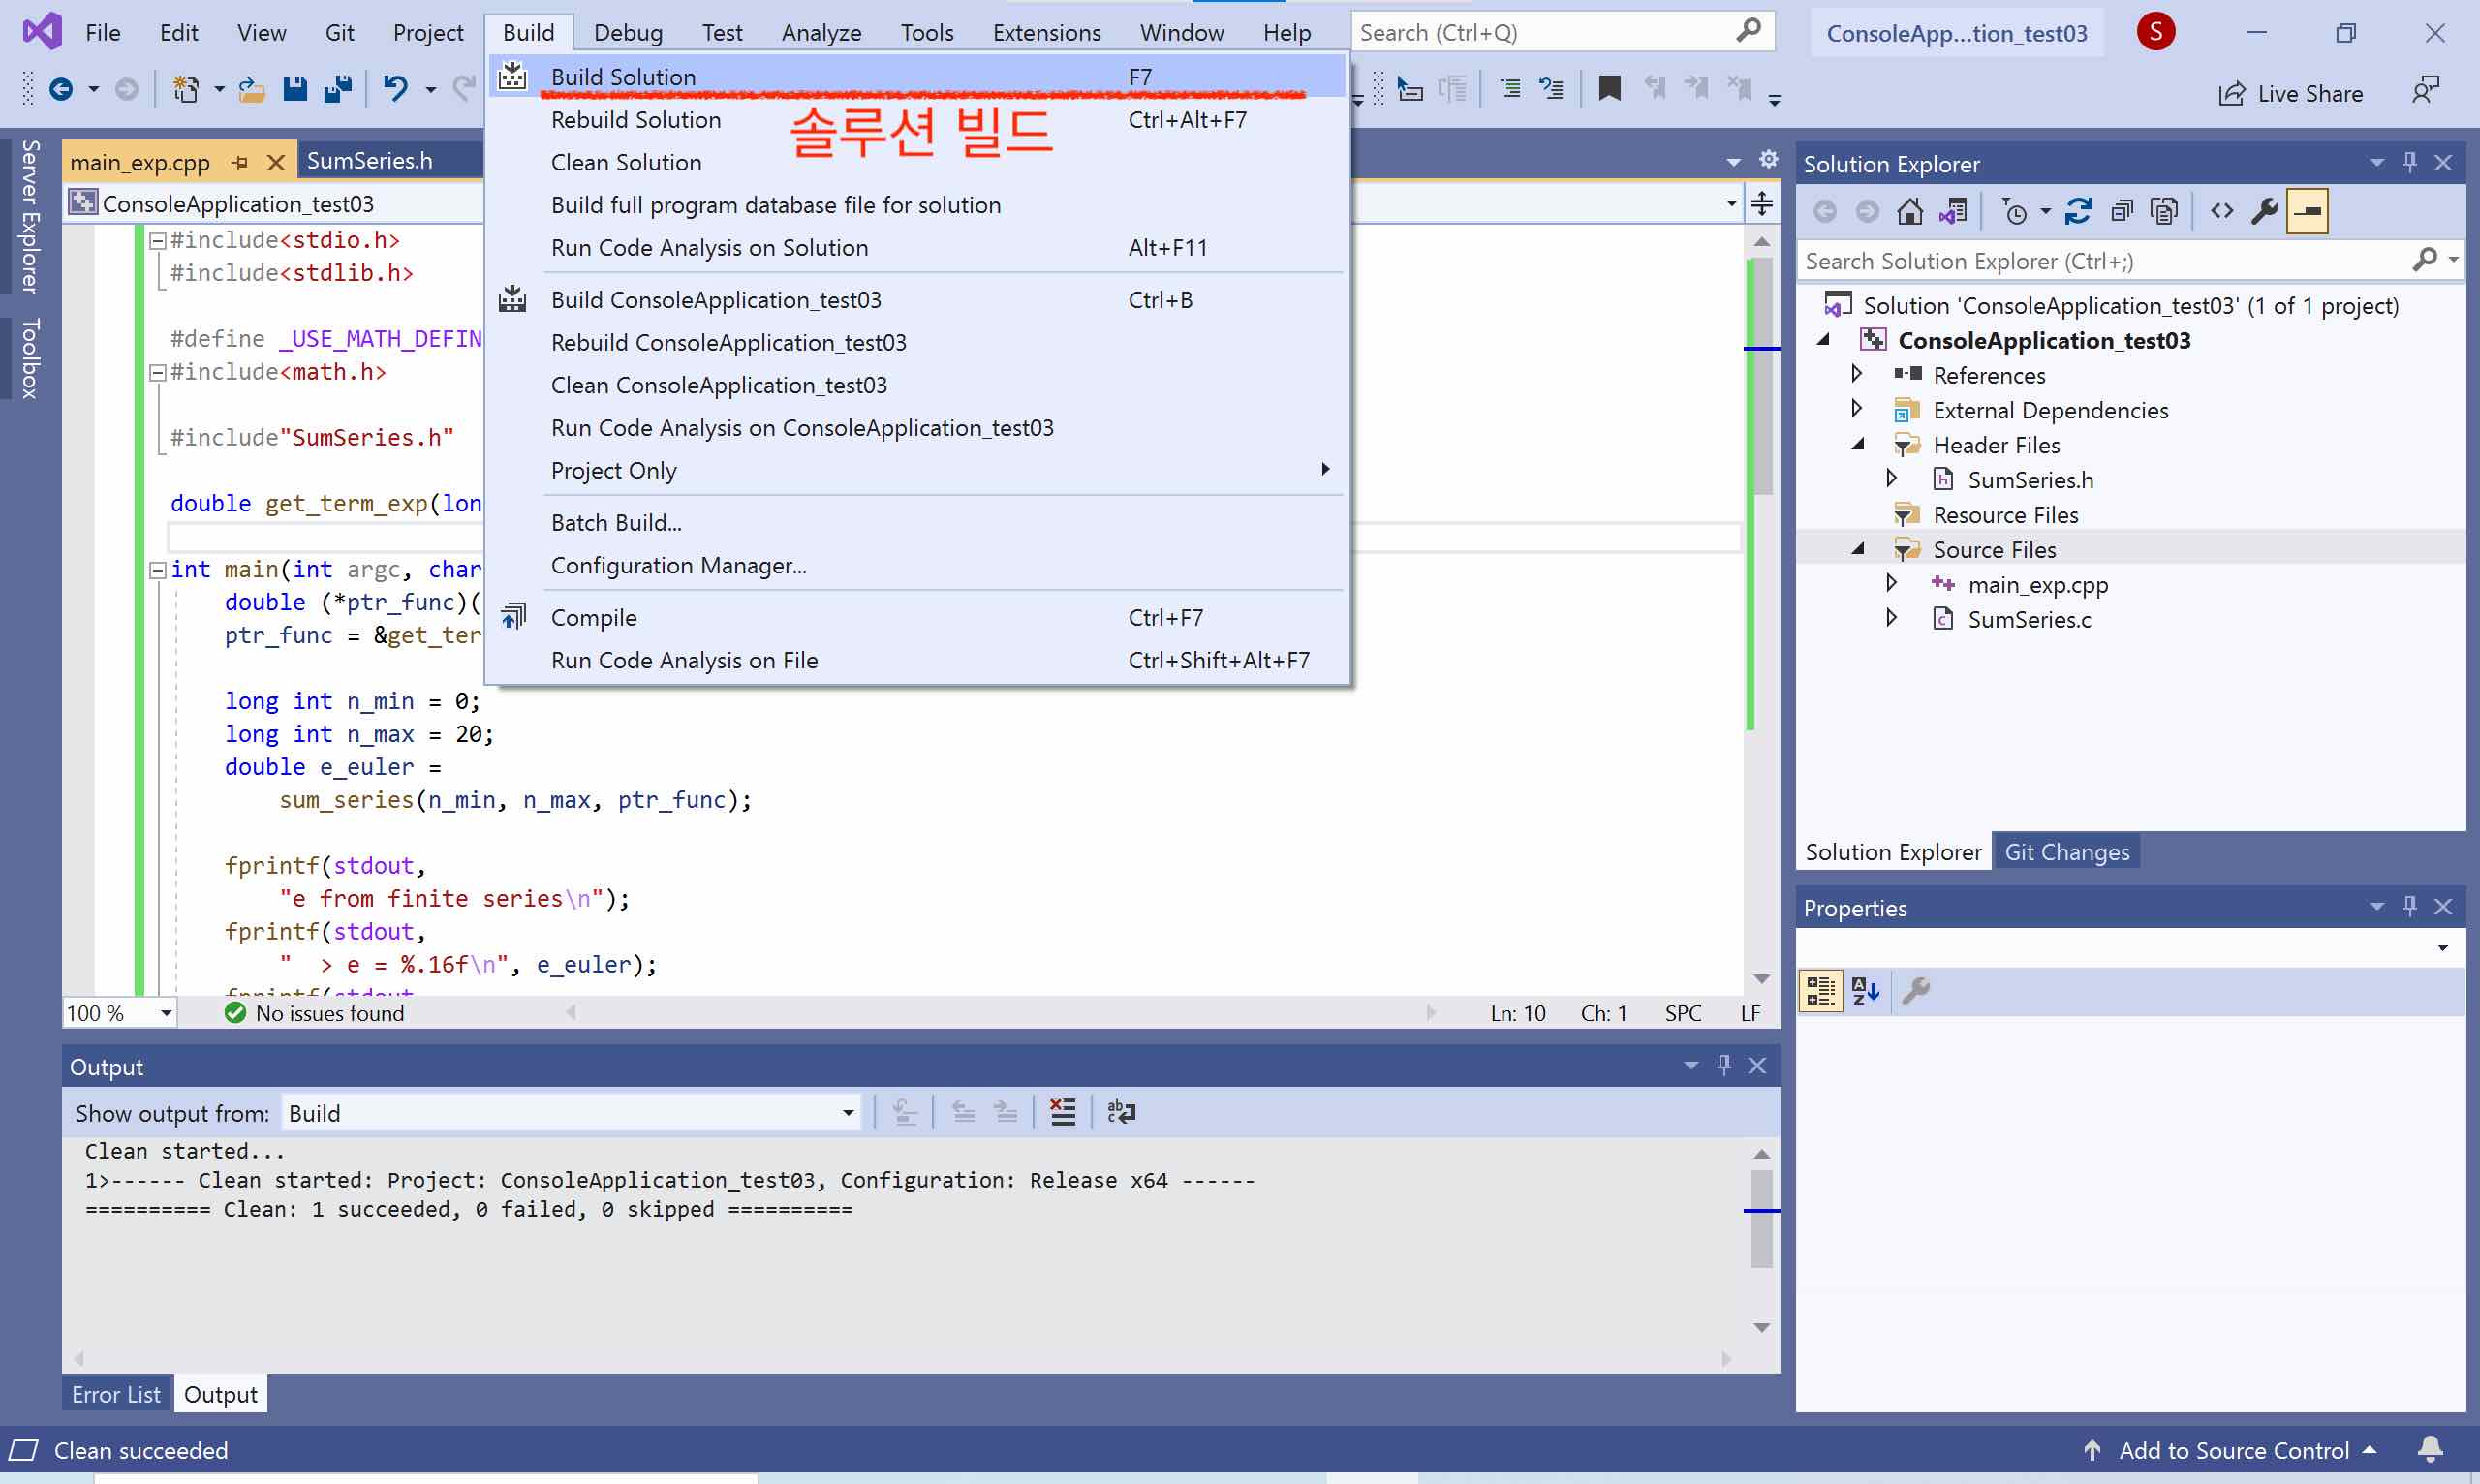 screenshot of Visual Studio 2019 main screen, showing an option to build the solution